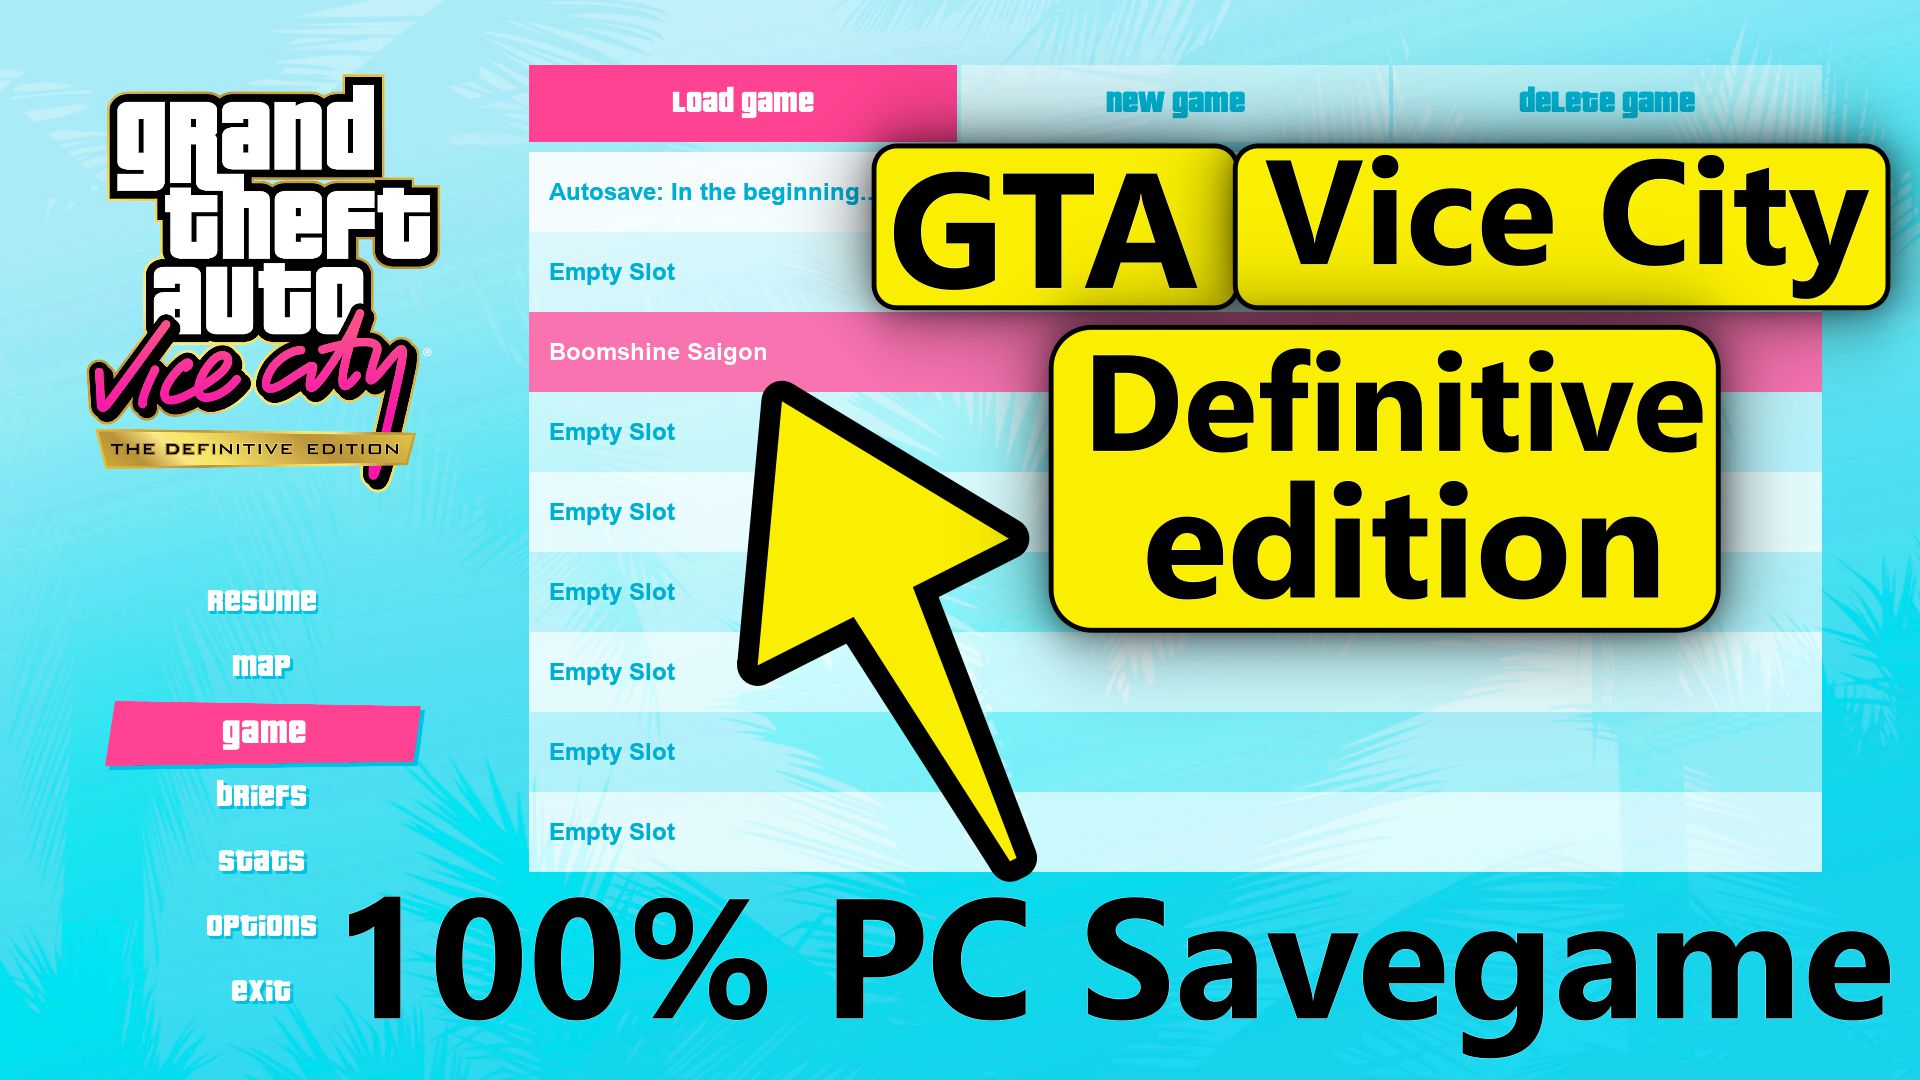 GTA vice city Definitive edition 100% PC Savegame Here